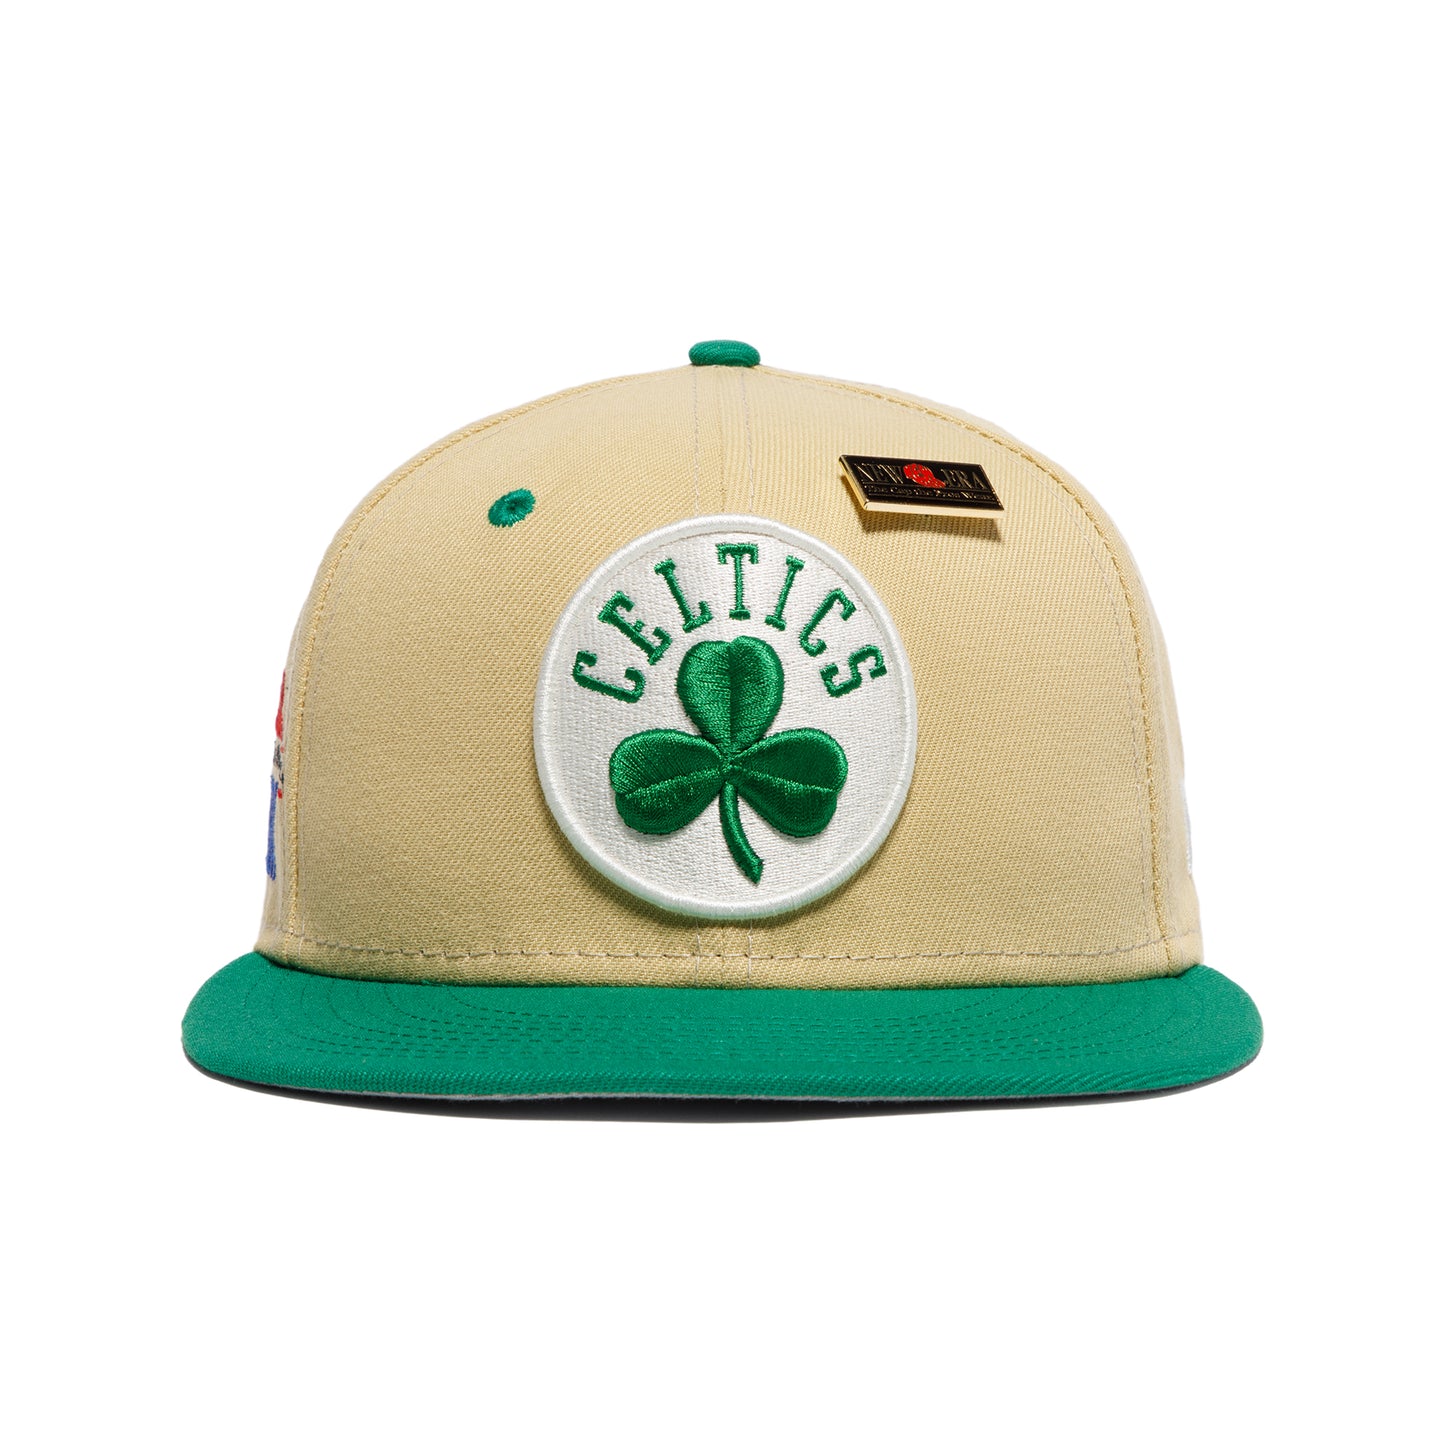 Boston Celtics Fitted Hat